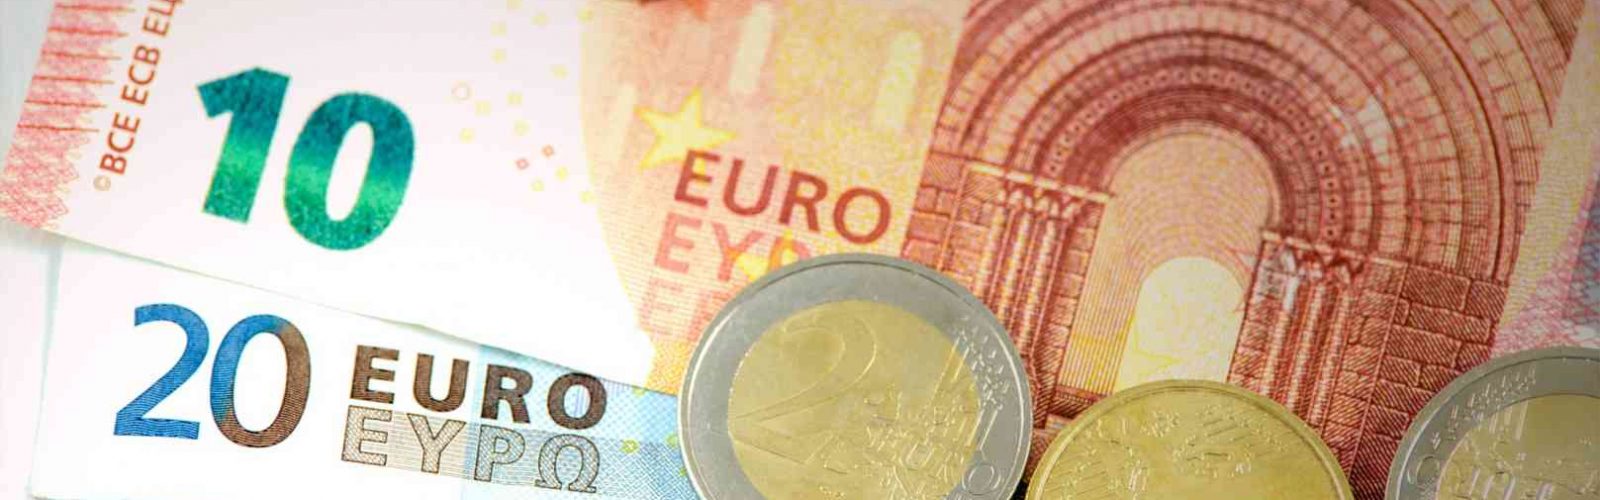 euro biljetten en muntstukken